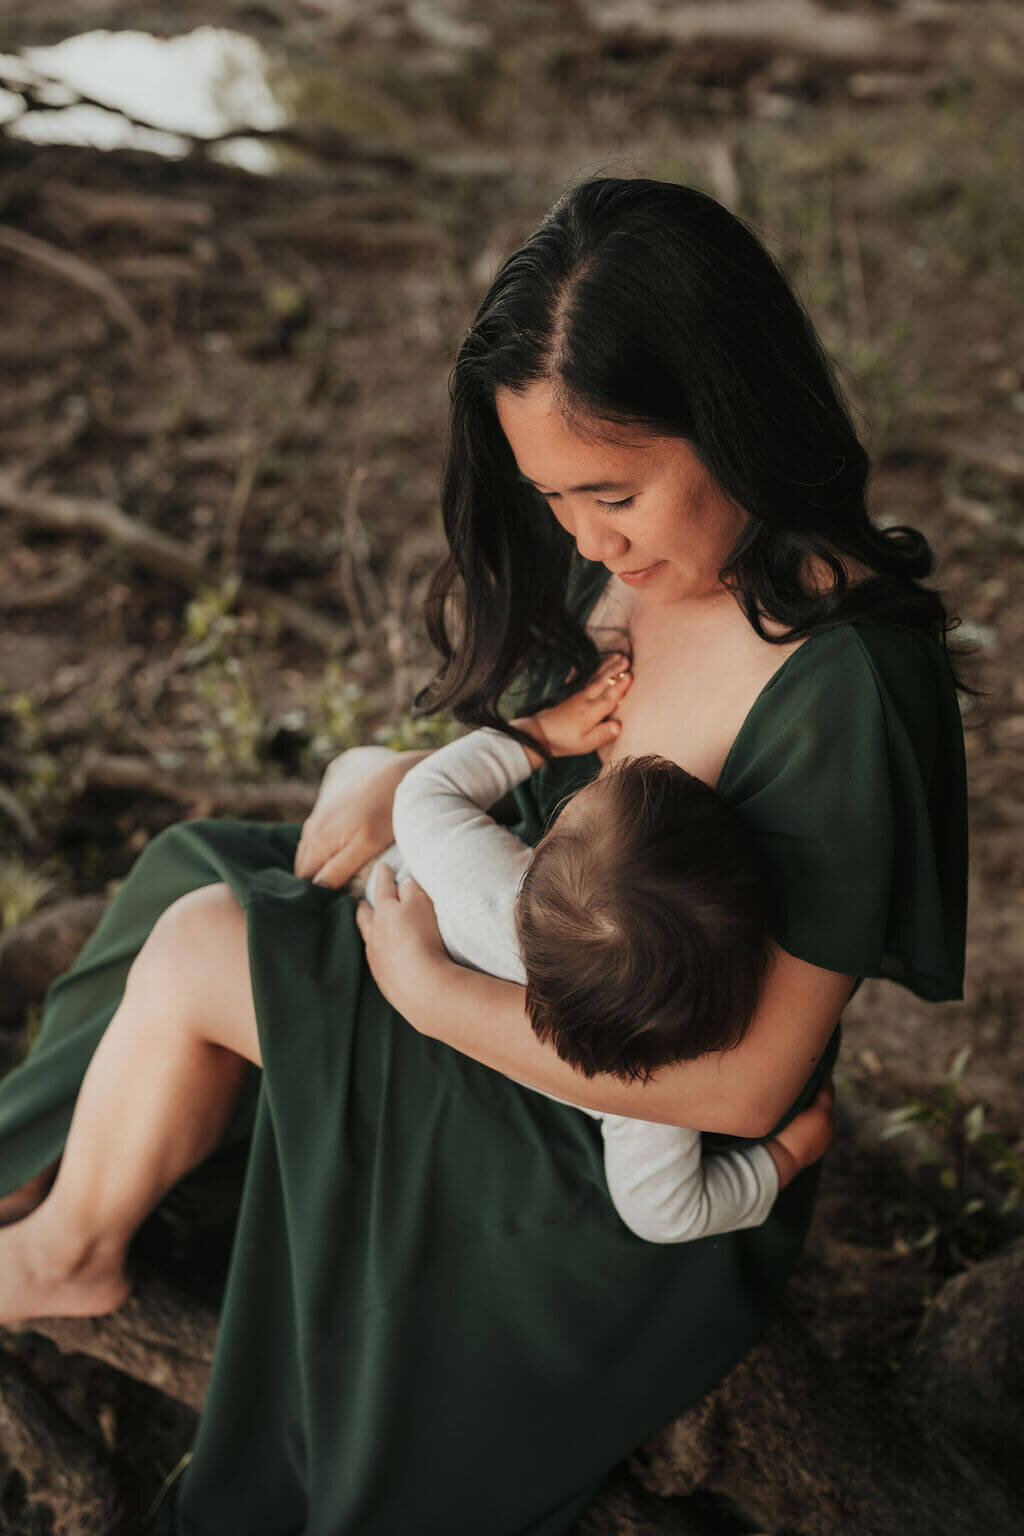 A mom nursing her son wearing a beautiful long green dress